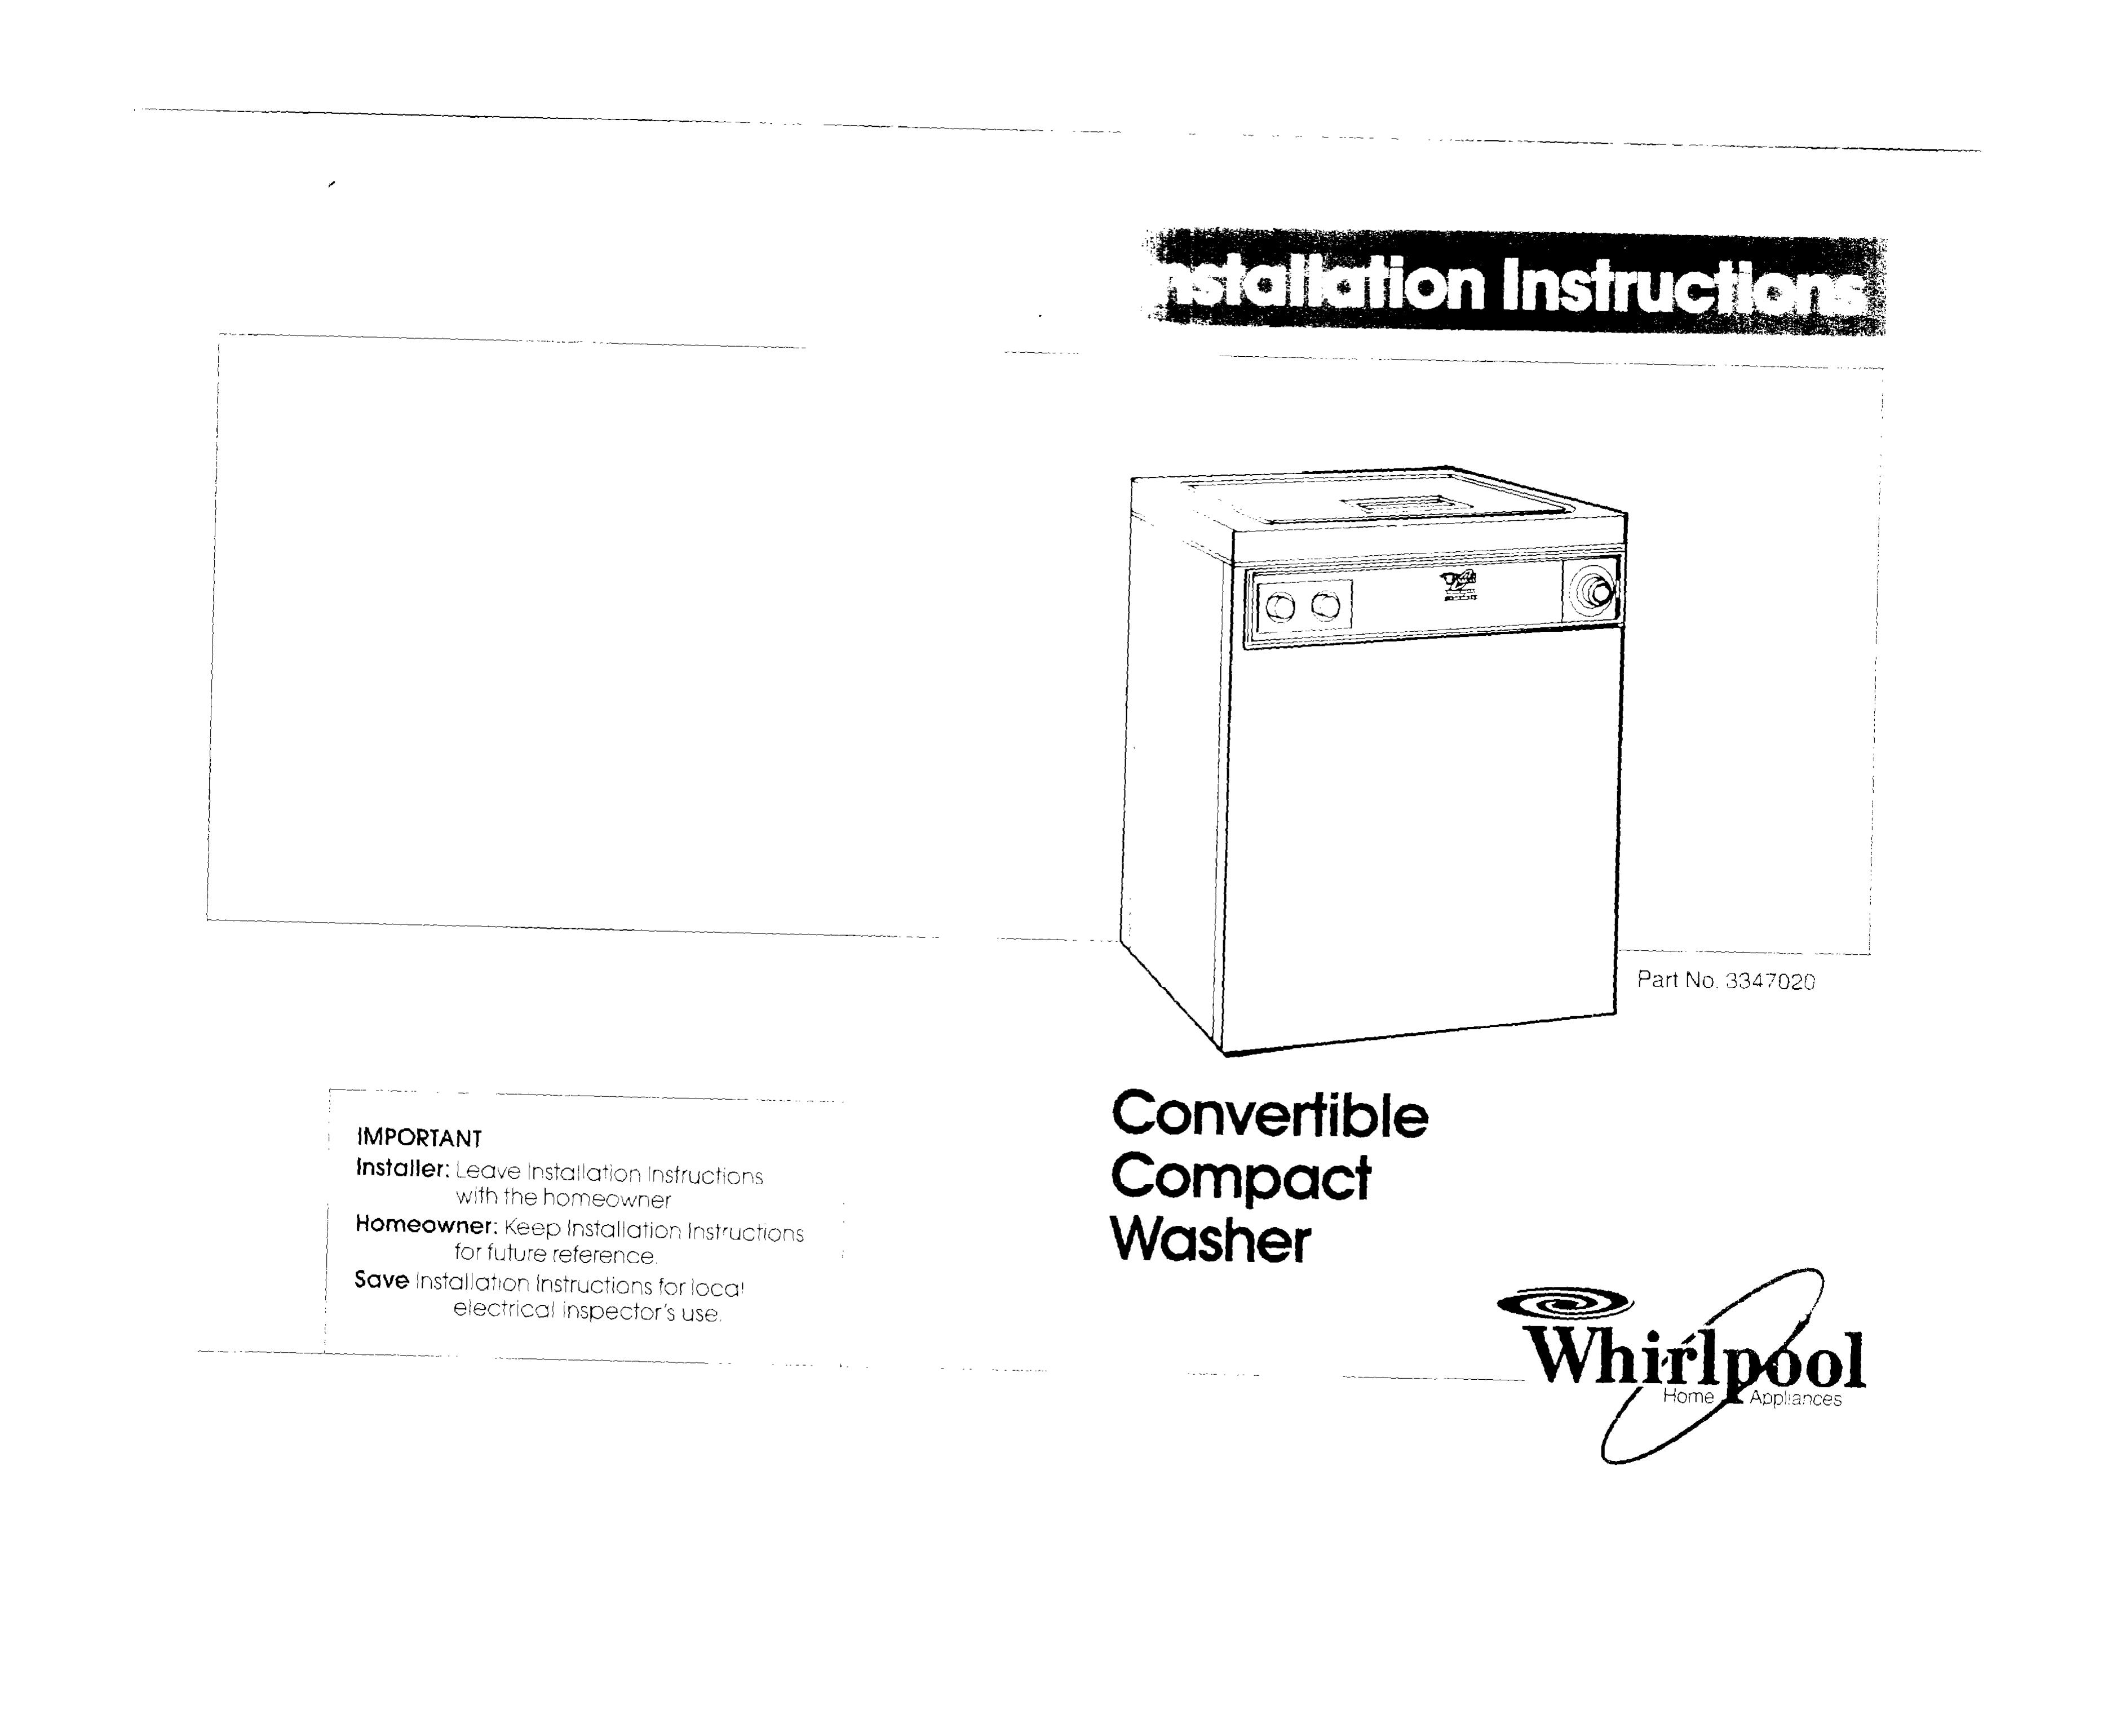 Whirlpool 334702G Washer User Manual